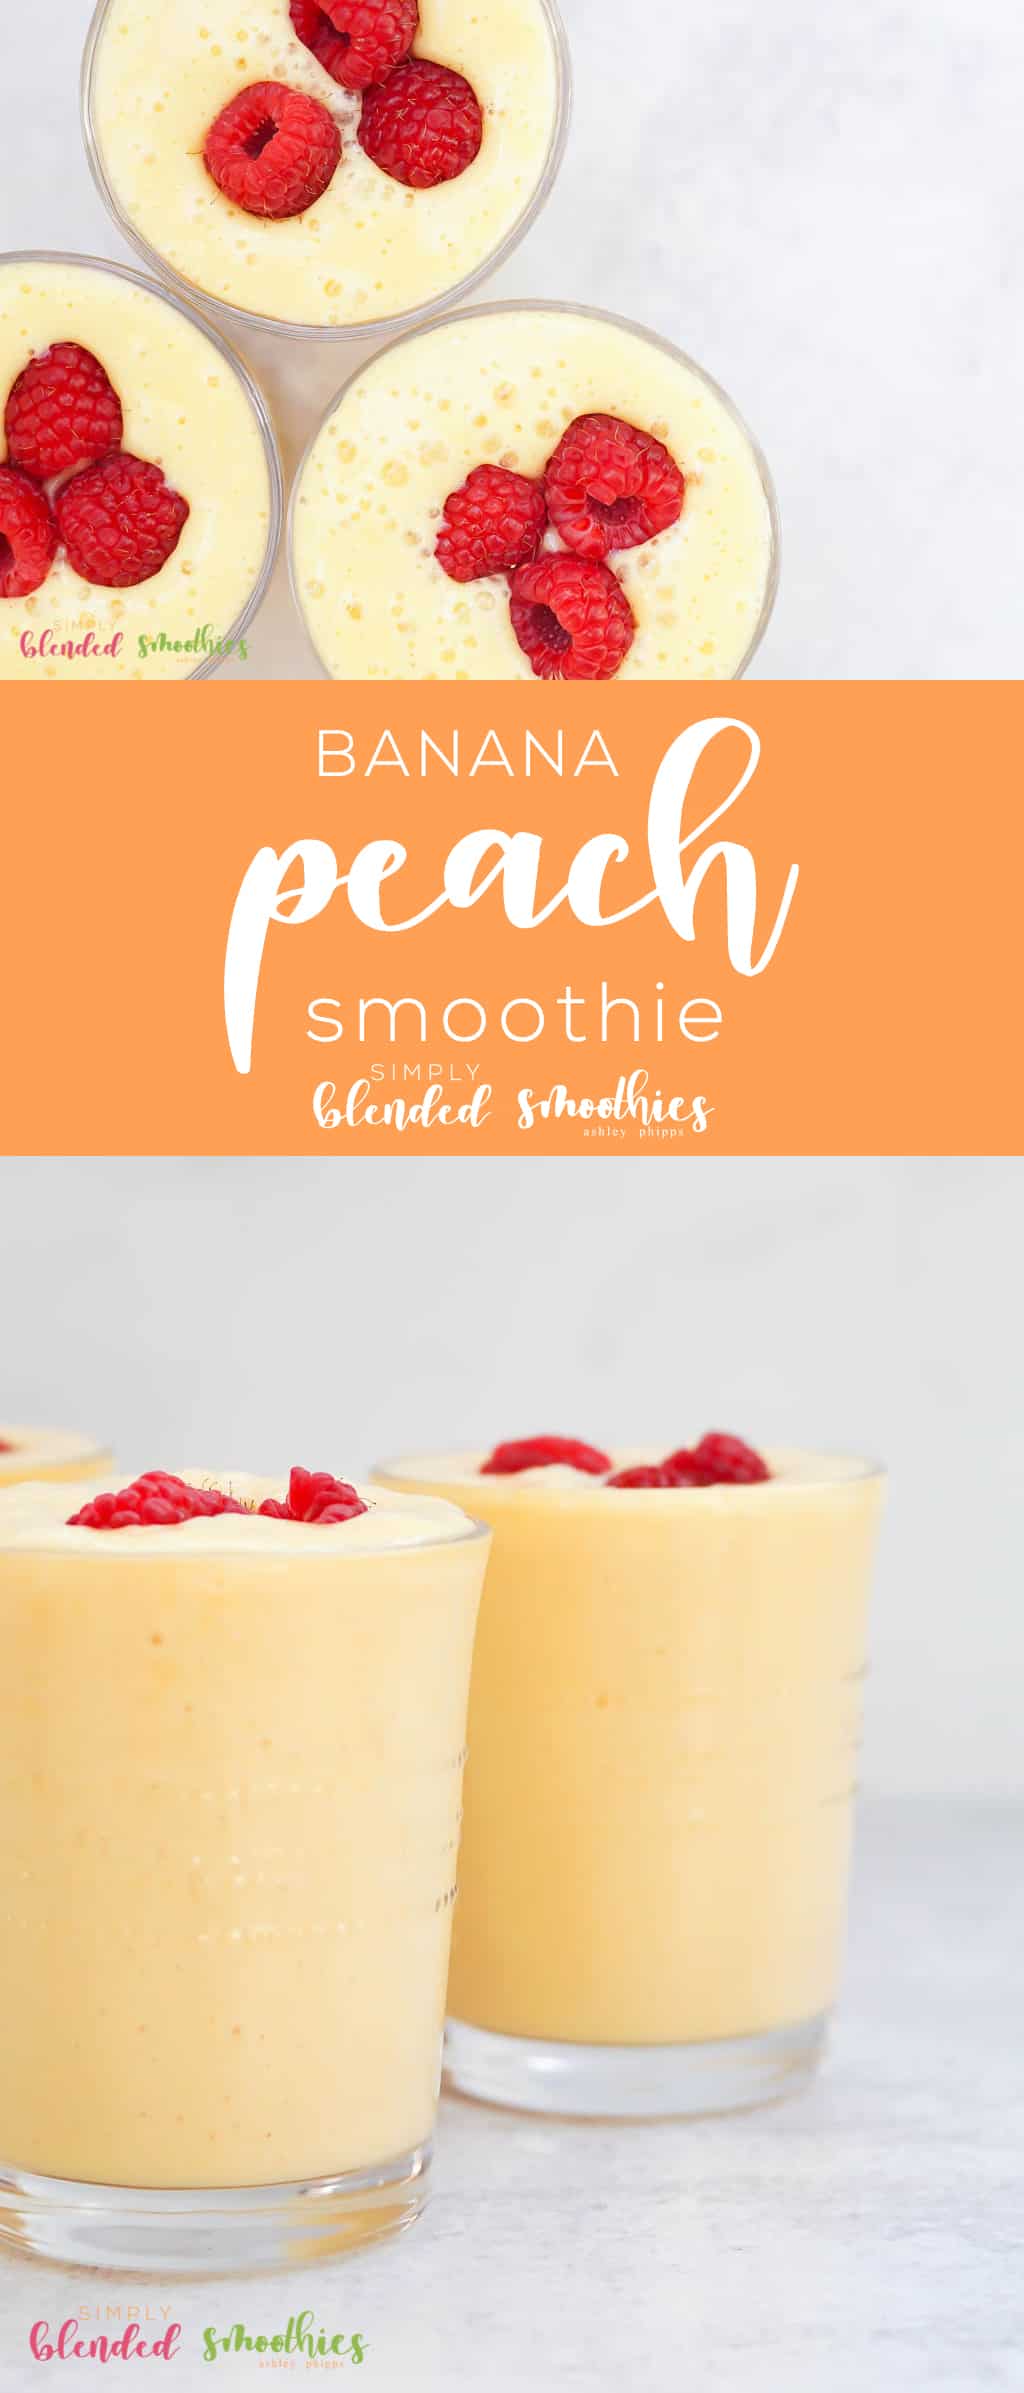 Peach Banana Smoothie Recipe - So Delicious And So Easy To Make